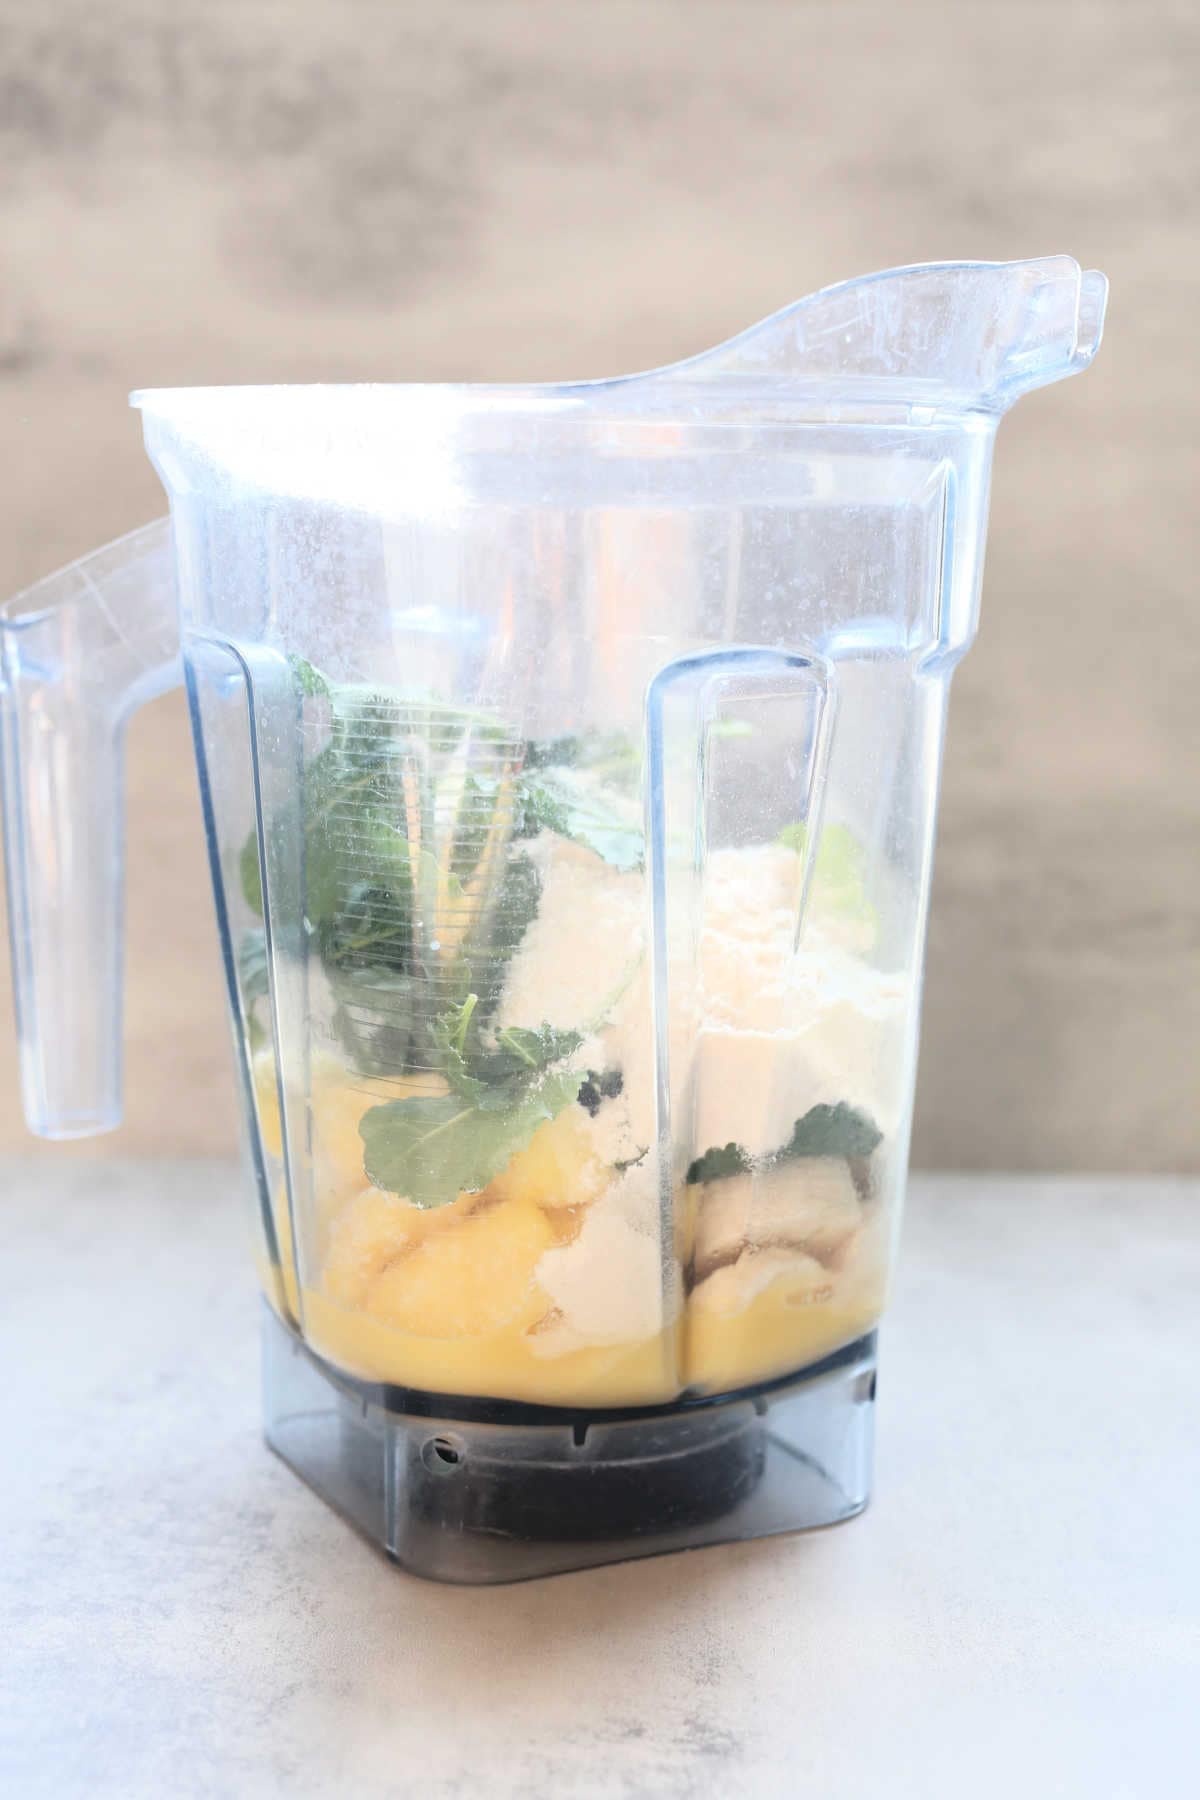 kale, protein powder, banana, pineapple, orange juice, in a Vitamix blender to make a smoothie